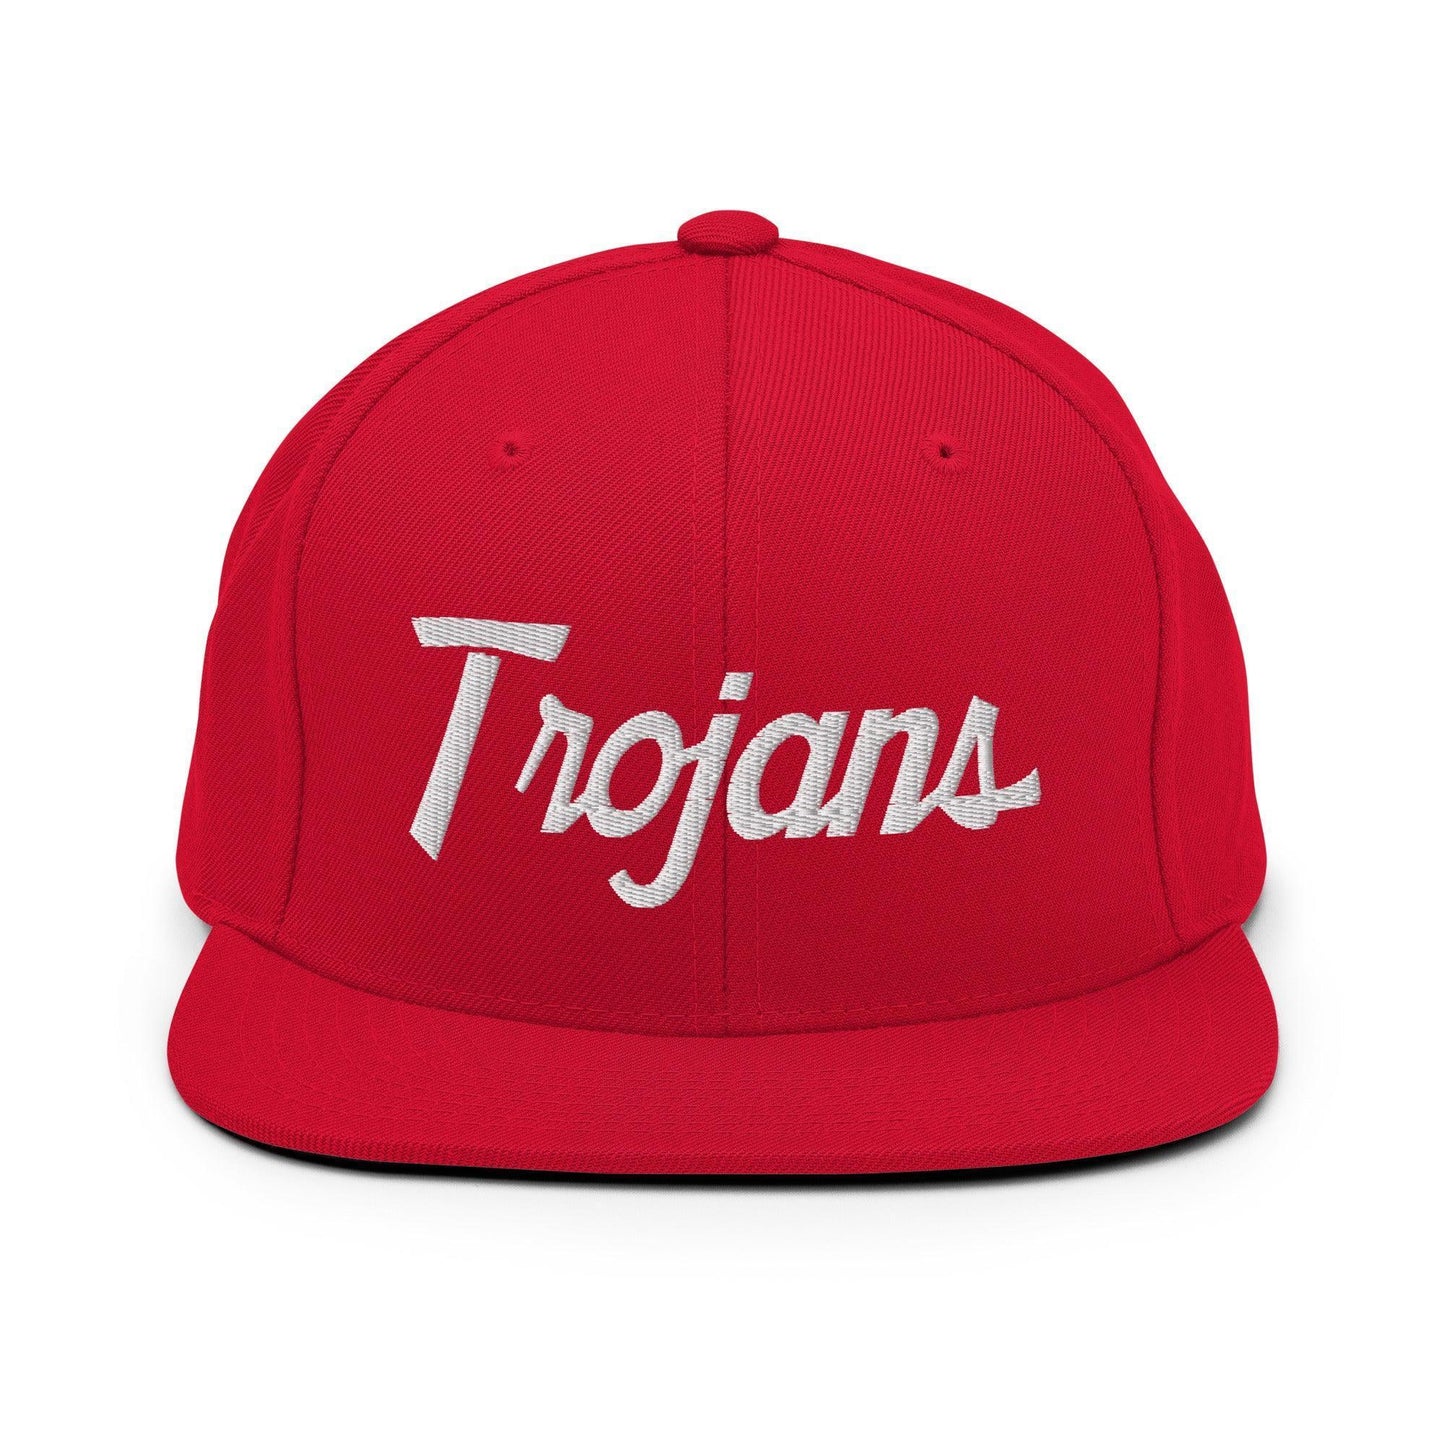 Trojans School Mascot Script Snapback Hat Red